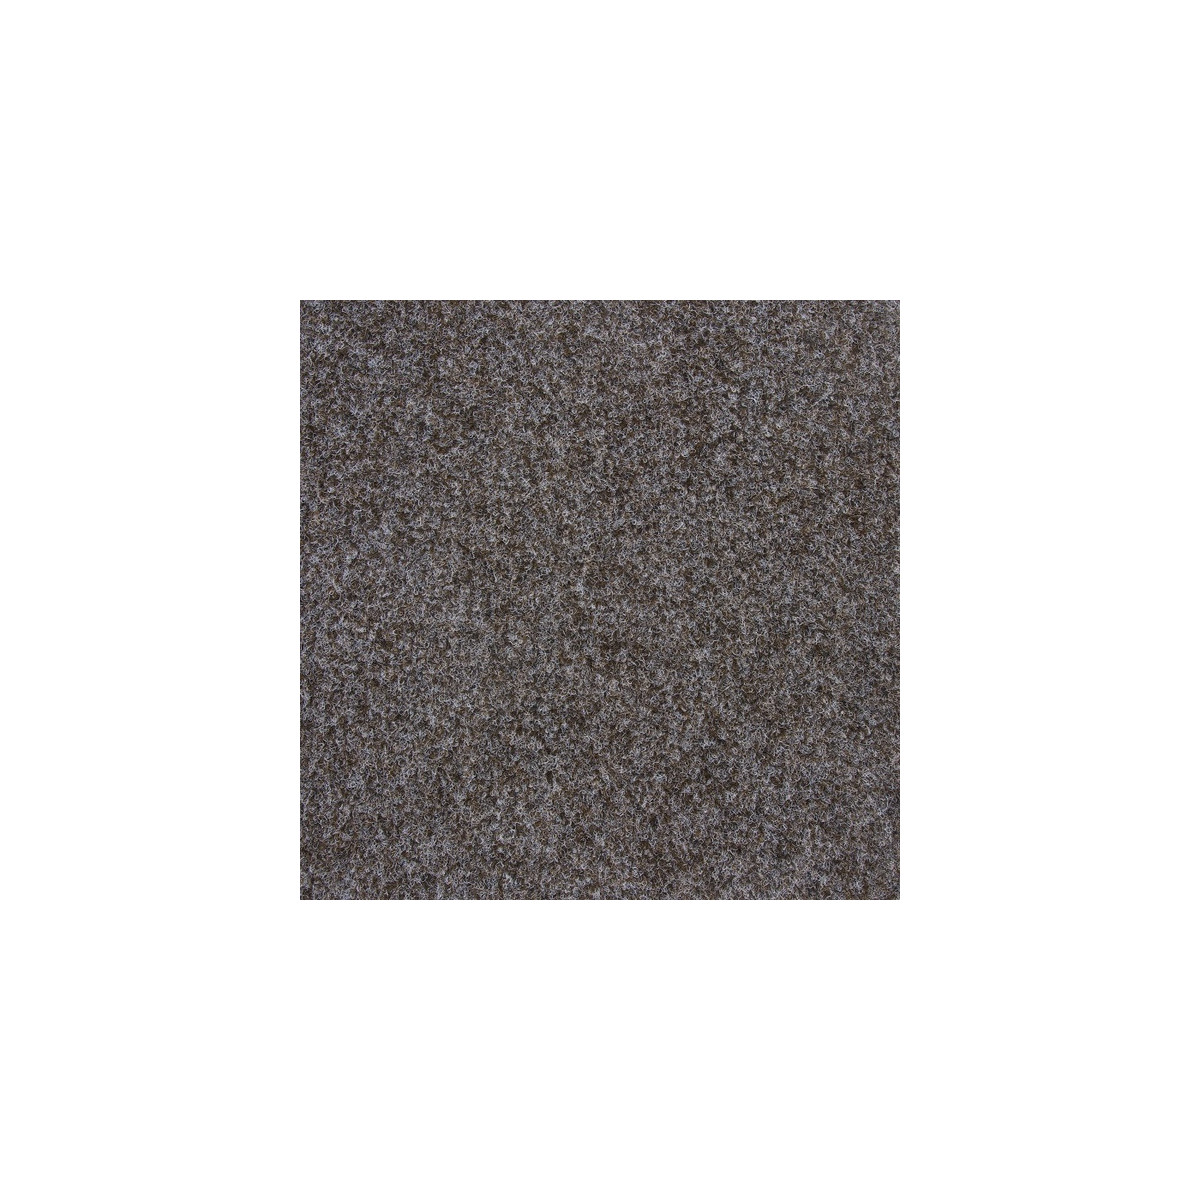 Metrážový koberec Rolex 0306 tmavě hnědá, zátěžový